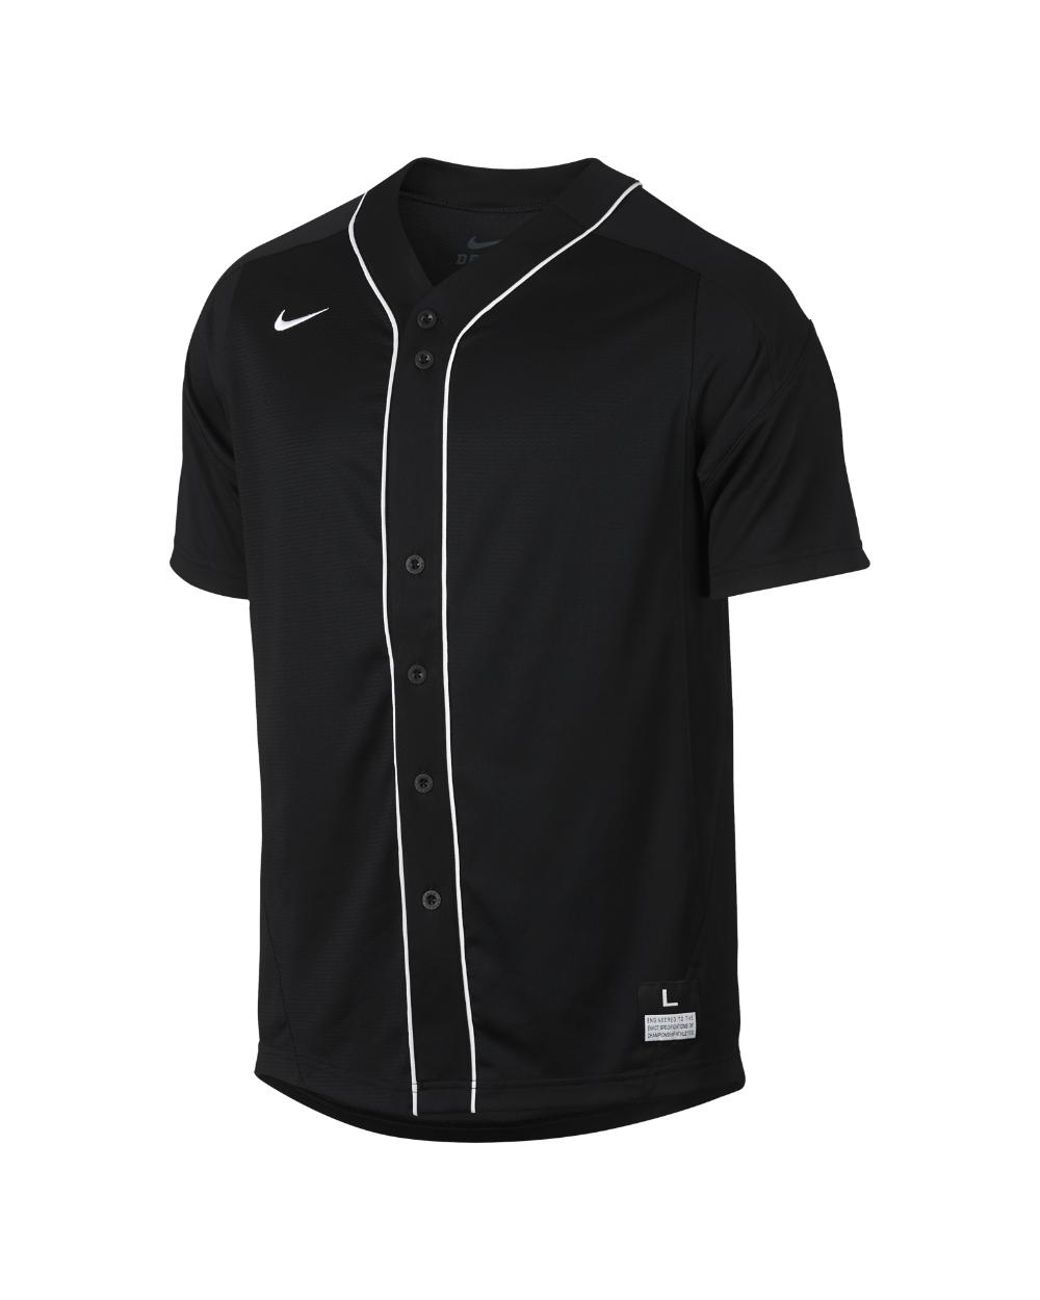 USC Trojans Nike Vapor Untouchable Elite Replica Full-Button Baseball Jersey - White